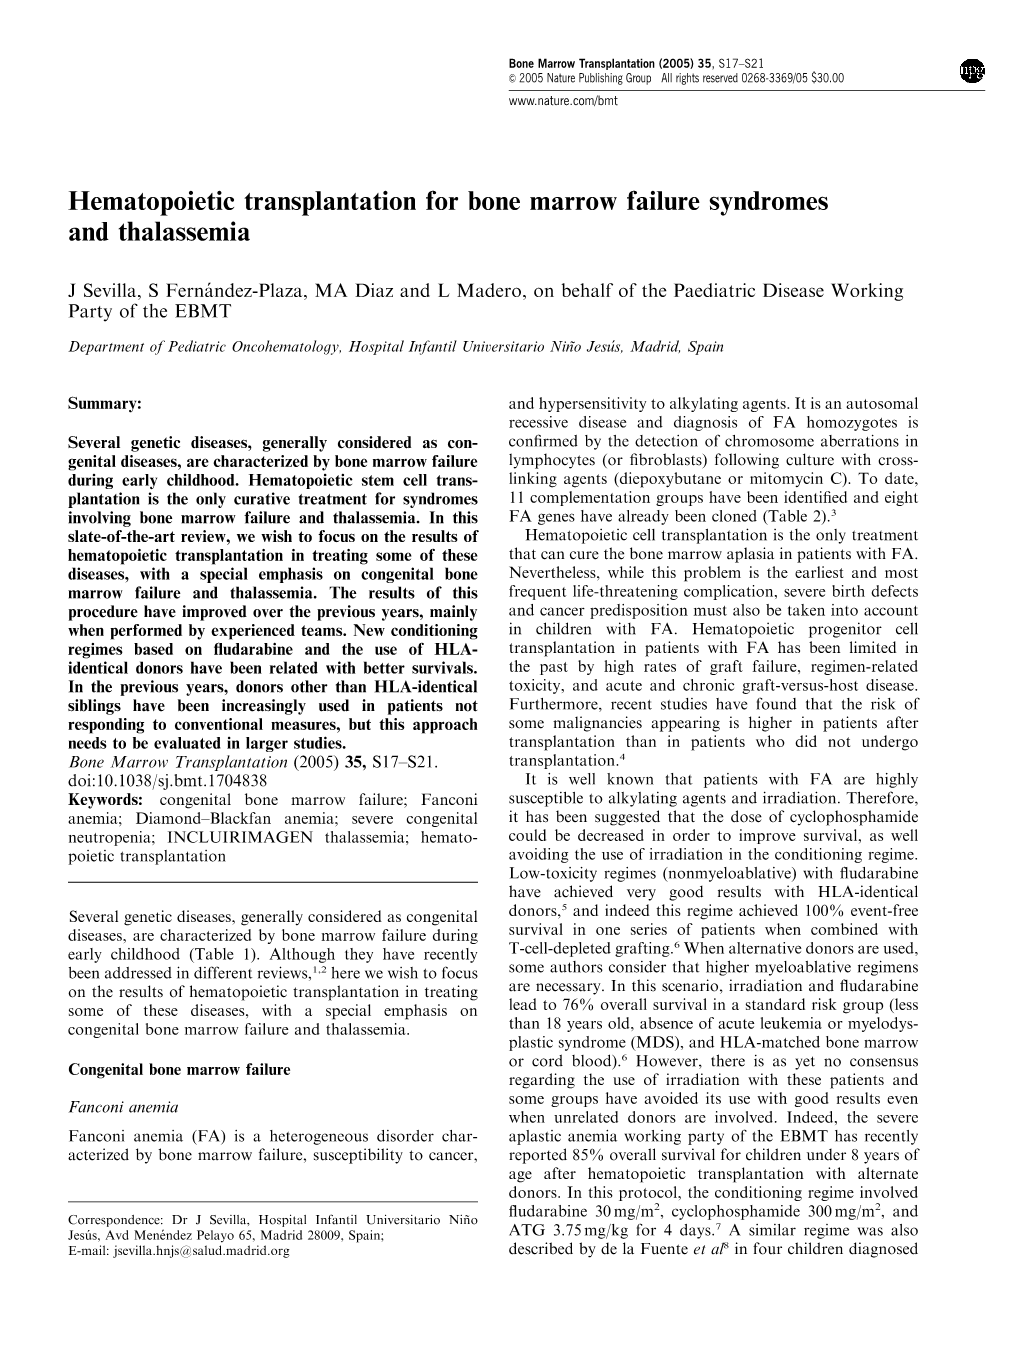 Hematopoietic Transplantation for Bone Marrow Failure Syndromes and Thalassemia